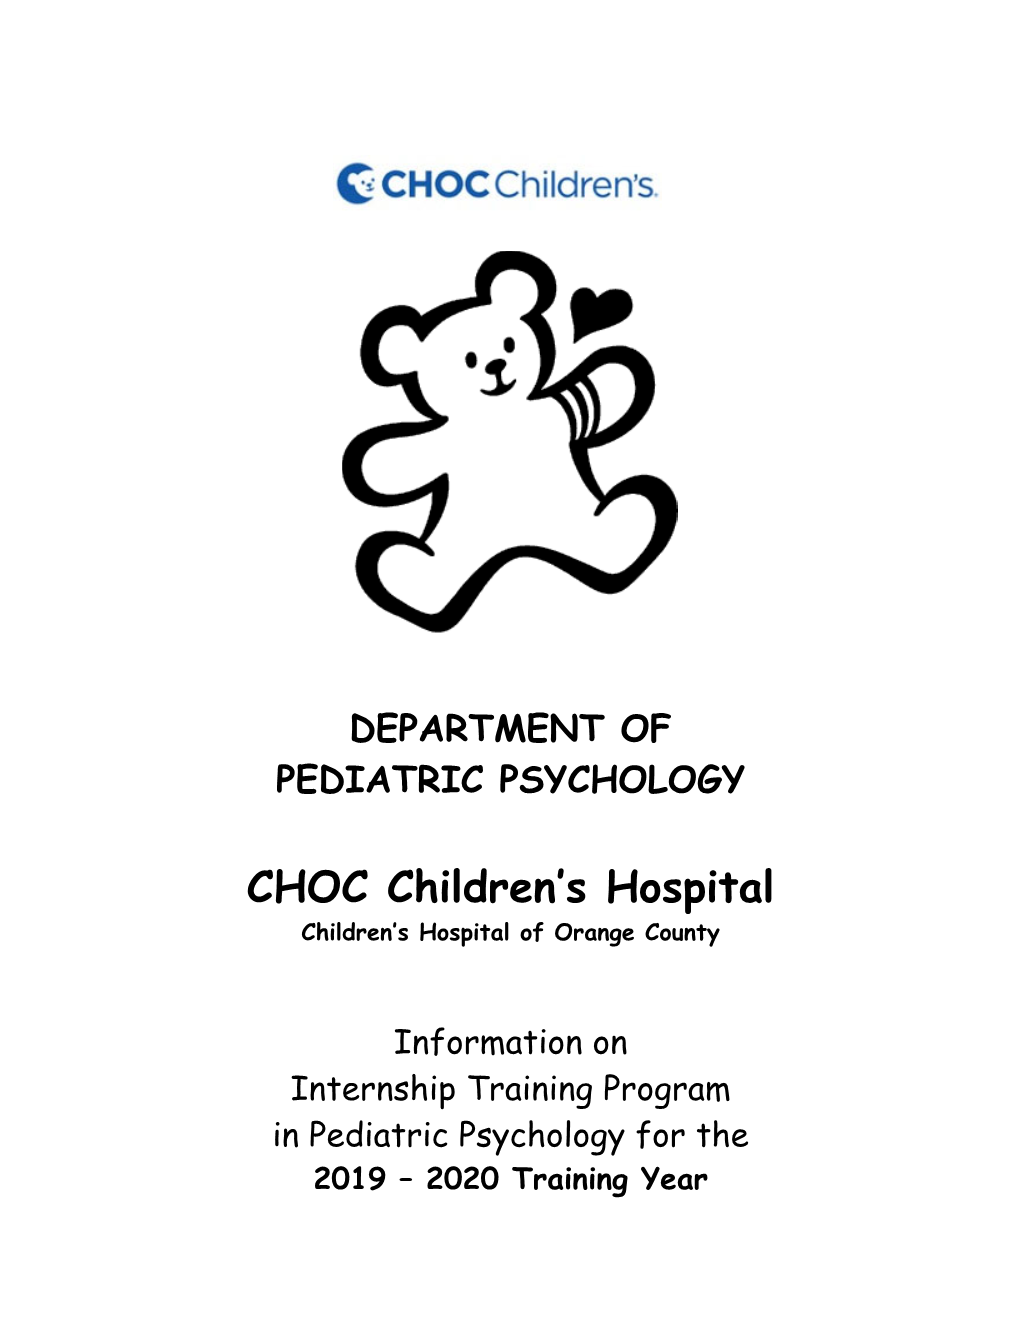 CHOC Children's Hospital